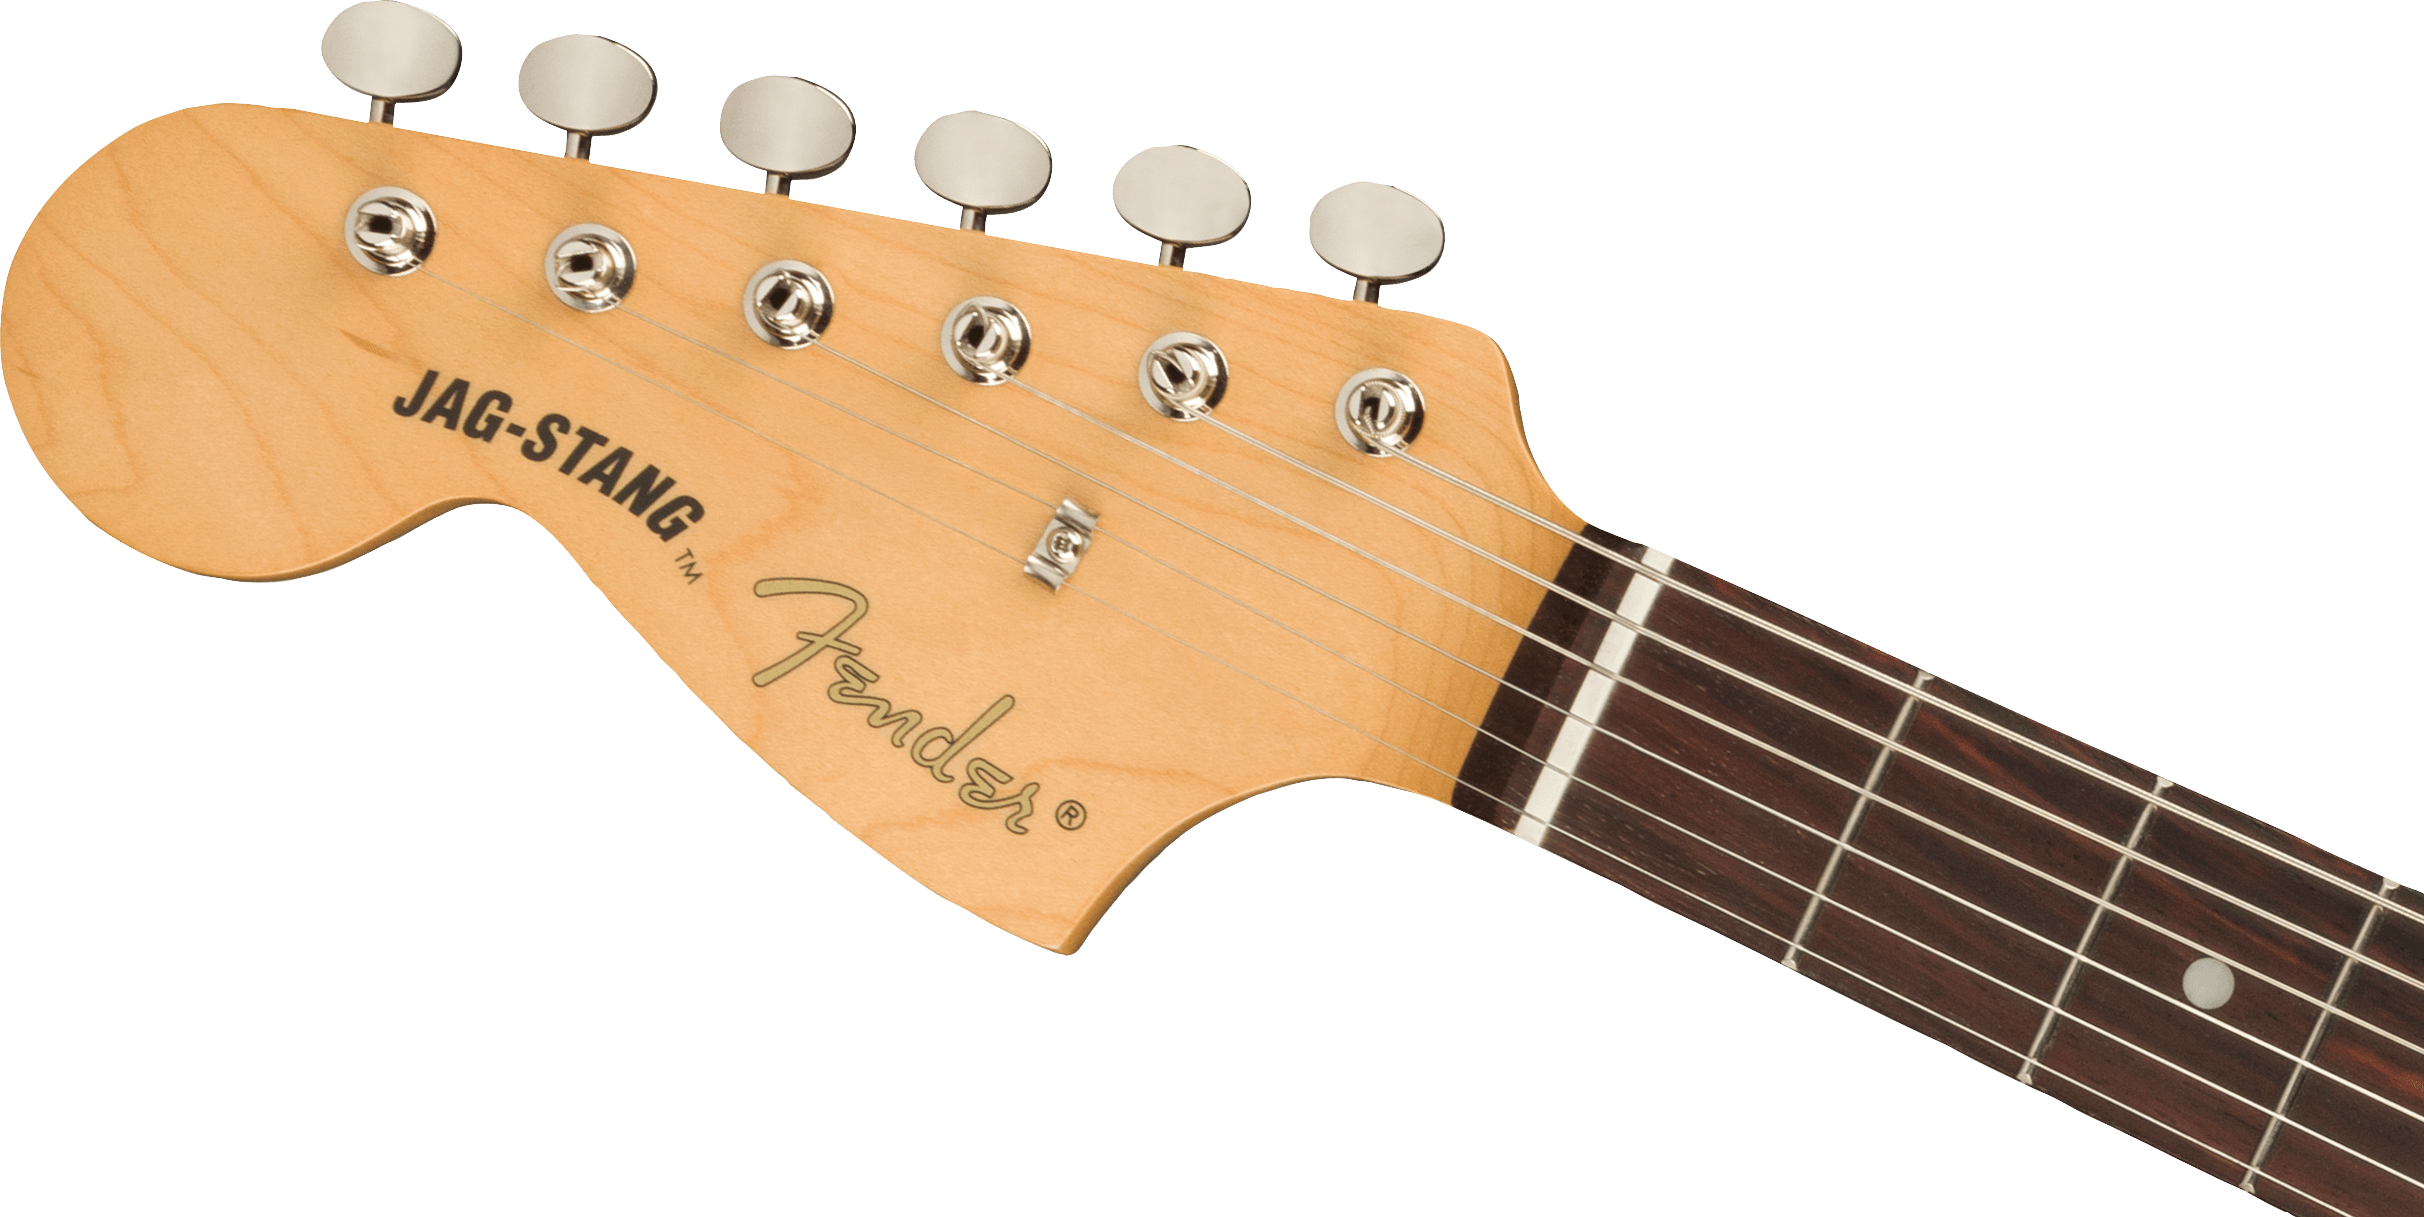 Fender Jag-stang Kurt Cobain Artist Gaucher Hs Trem Rw - Fiesta Red - Linkshandige elektrische gitaar - Variation 3